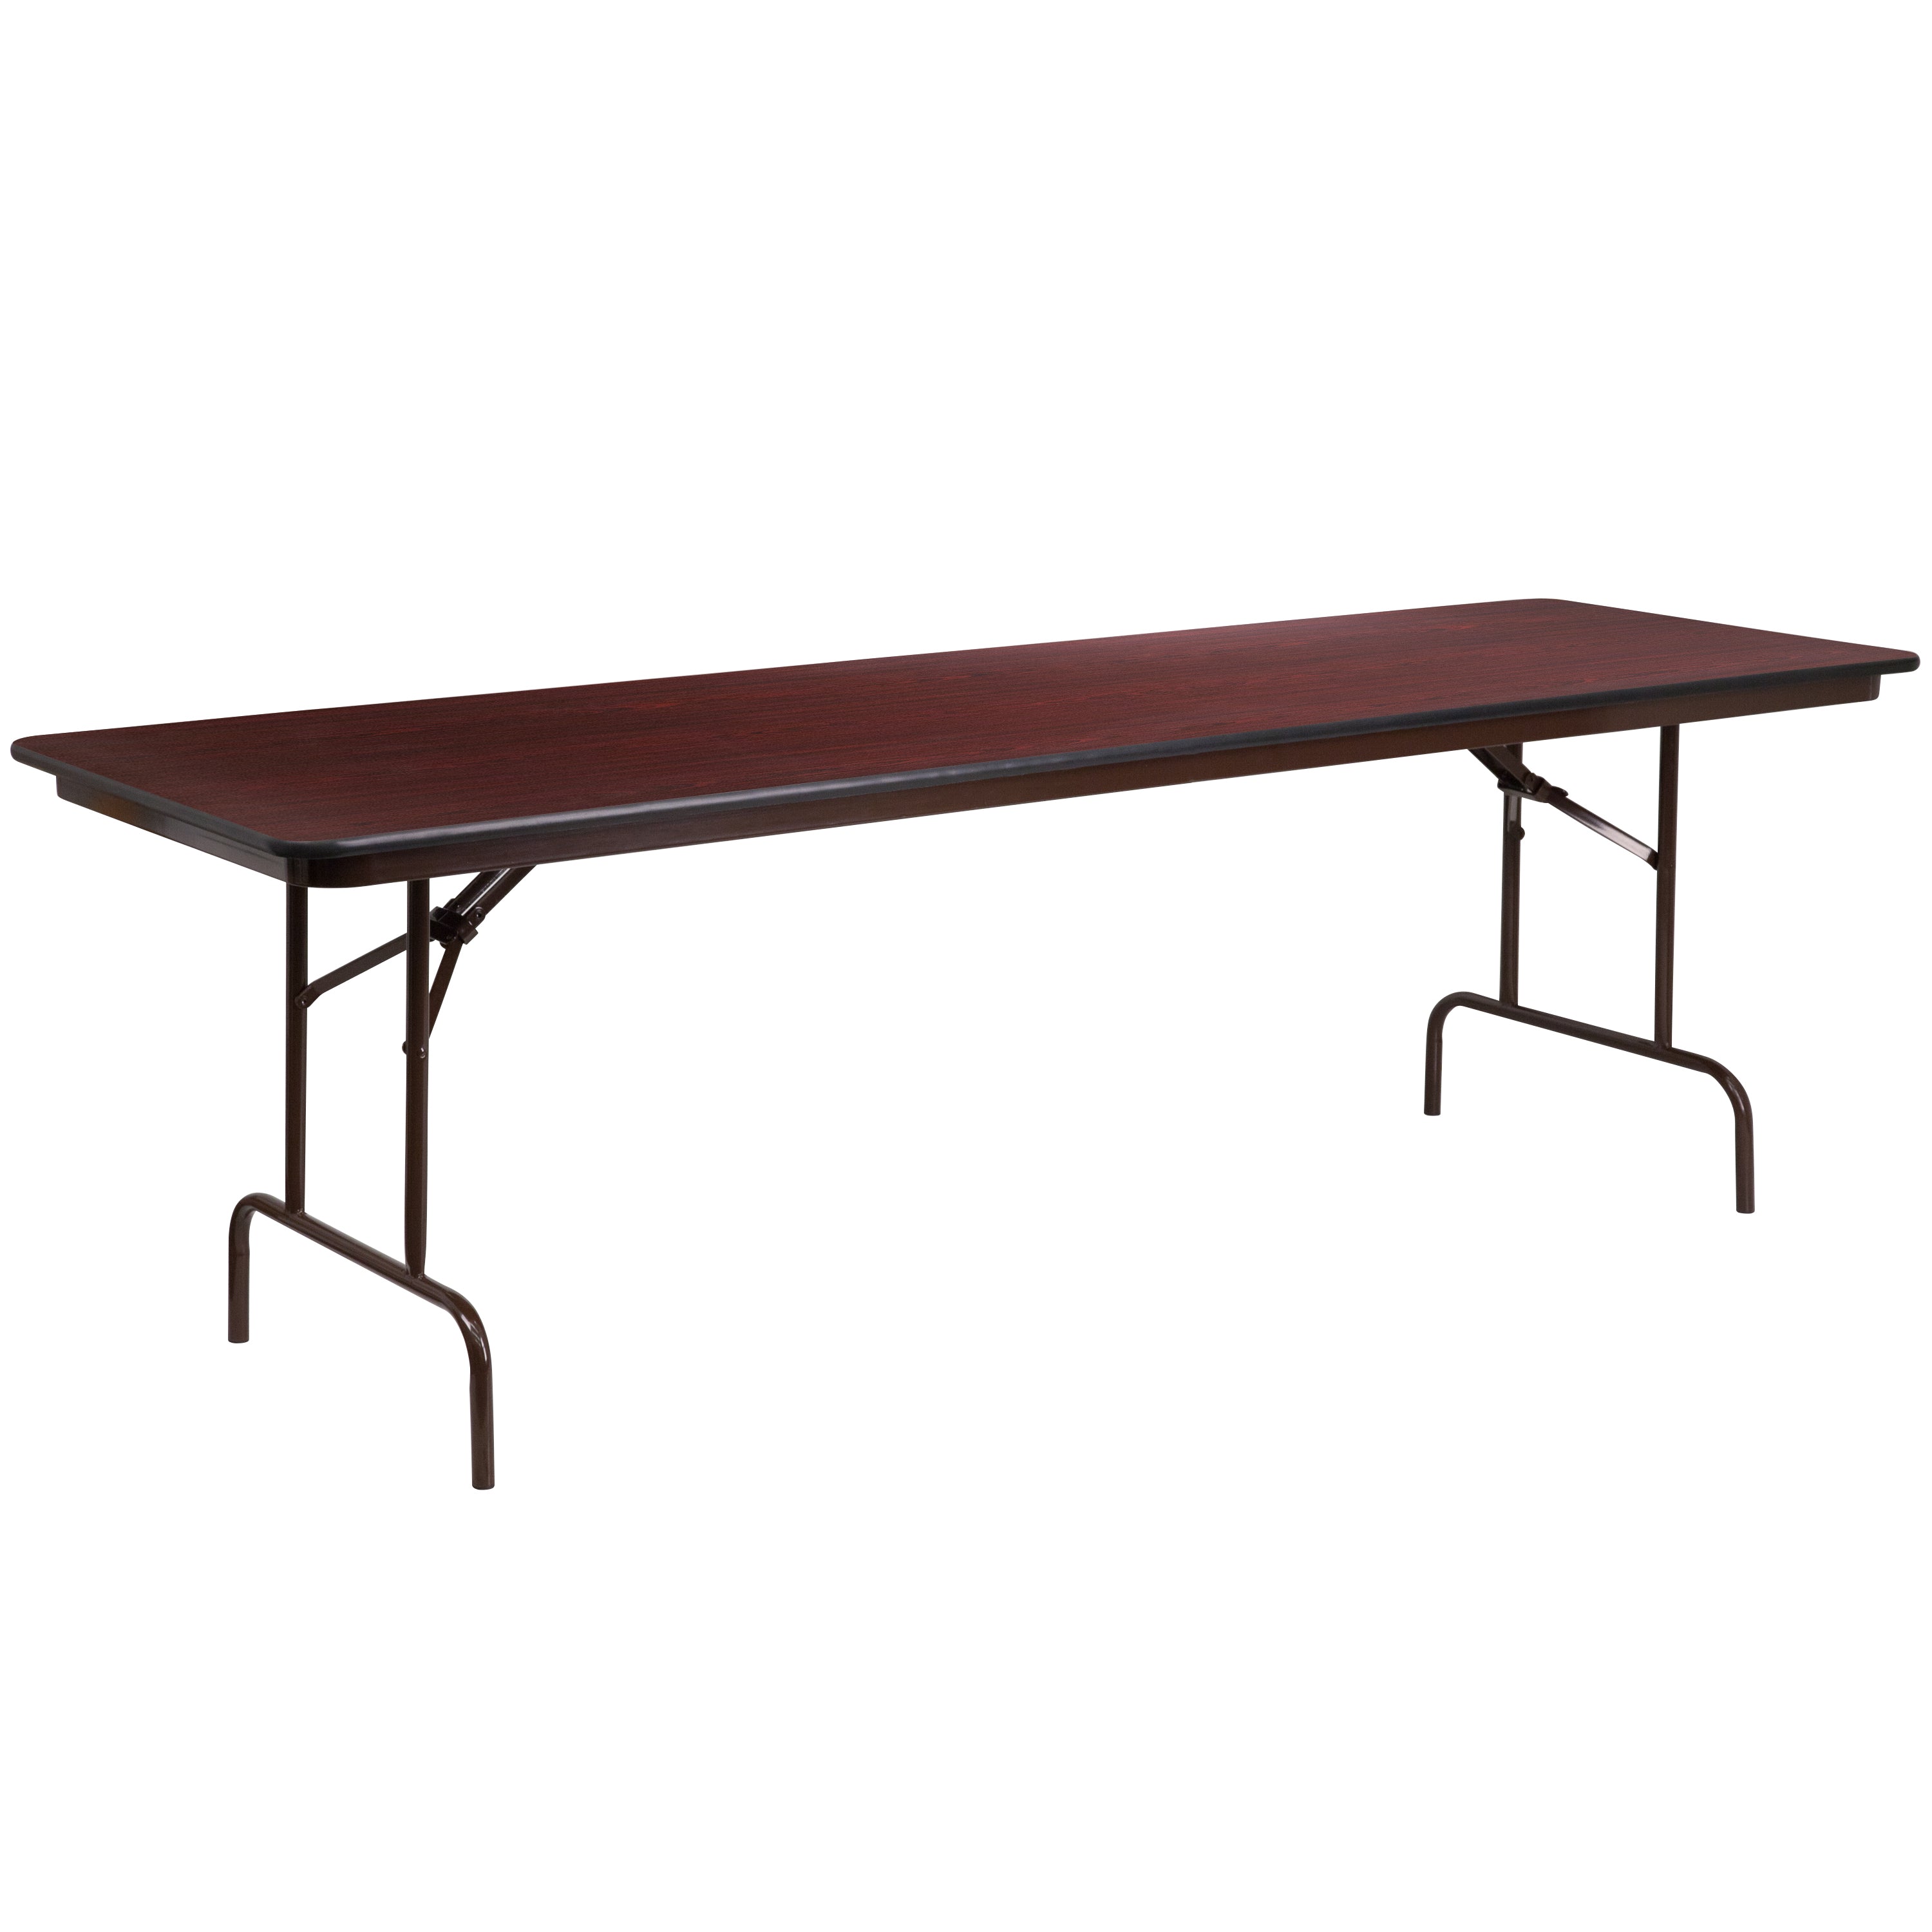 8-Foot Mahogany Melamine Laminate Folding Banquet Table-Rectangular Melamine Folding Table-Flash Furniture-Wall2Wall Furnishings